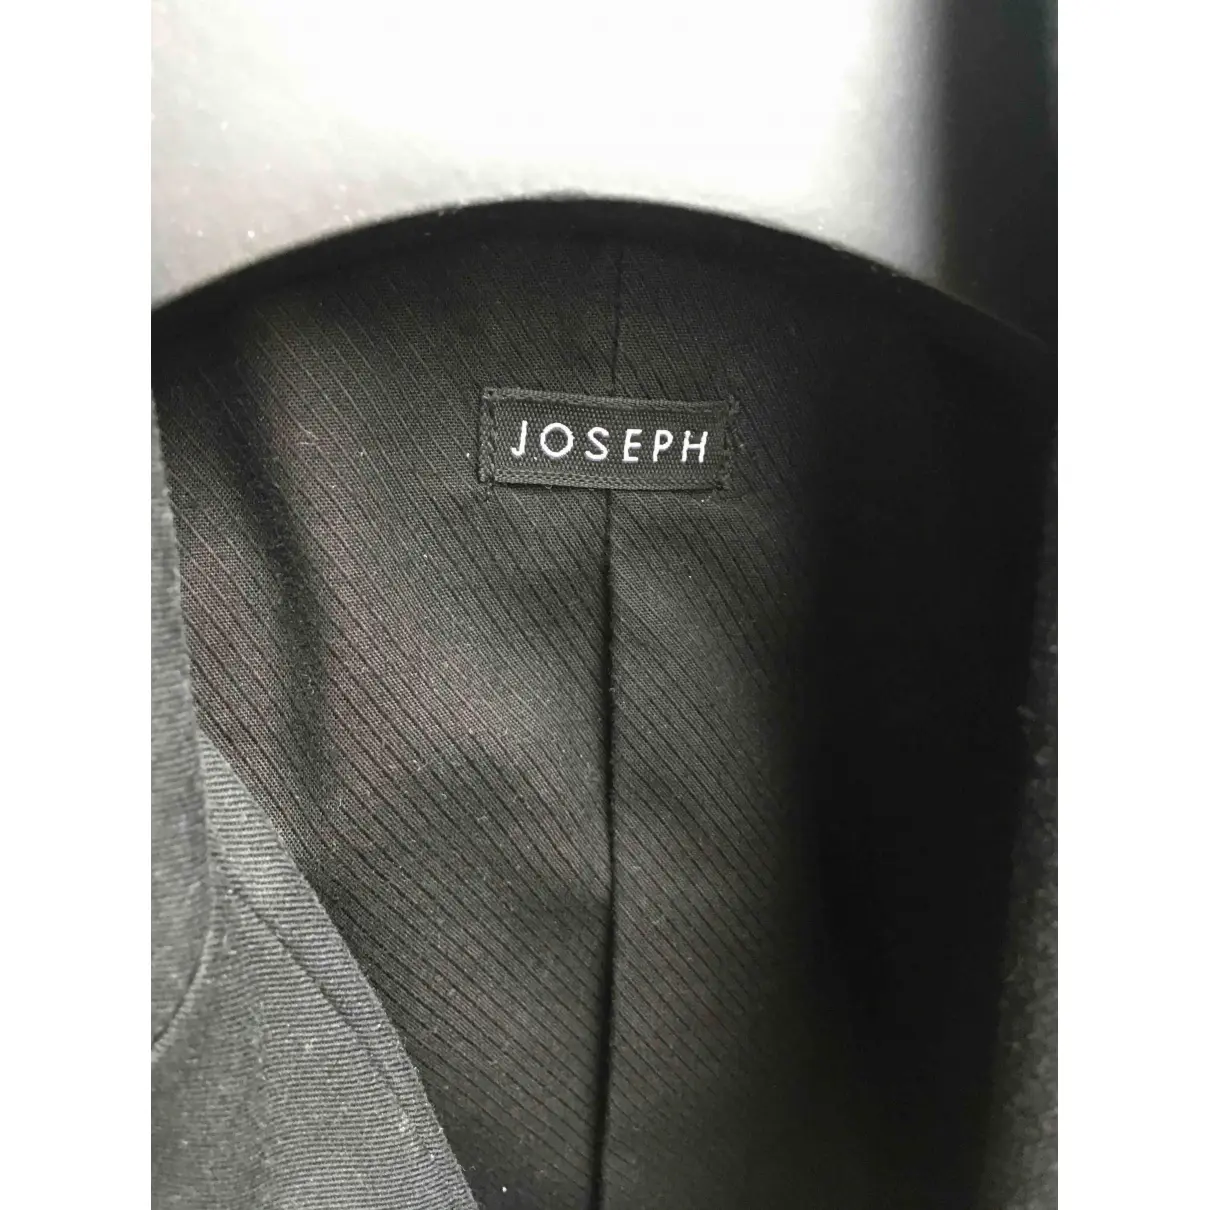 Buy Joseph Trench coat online